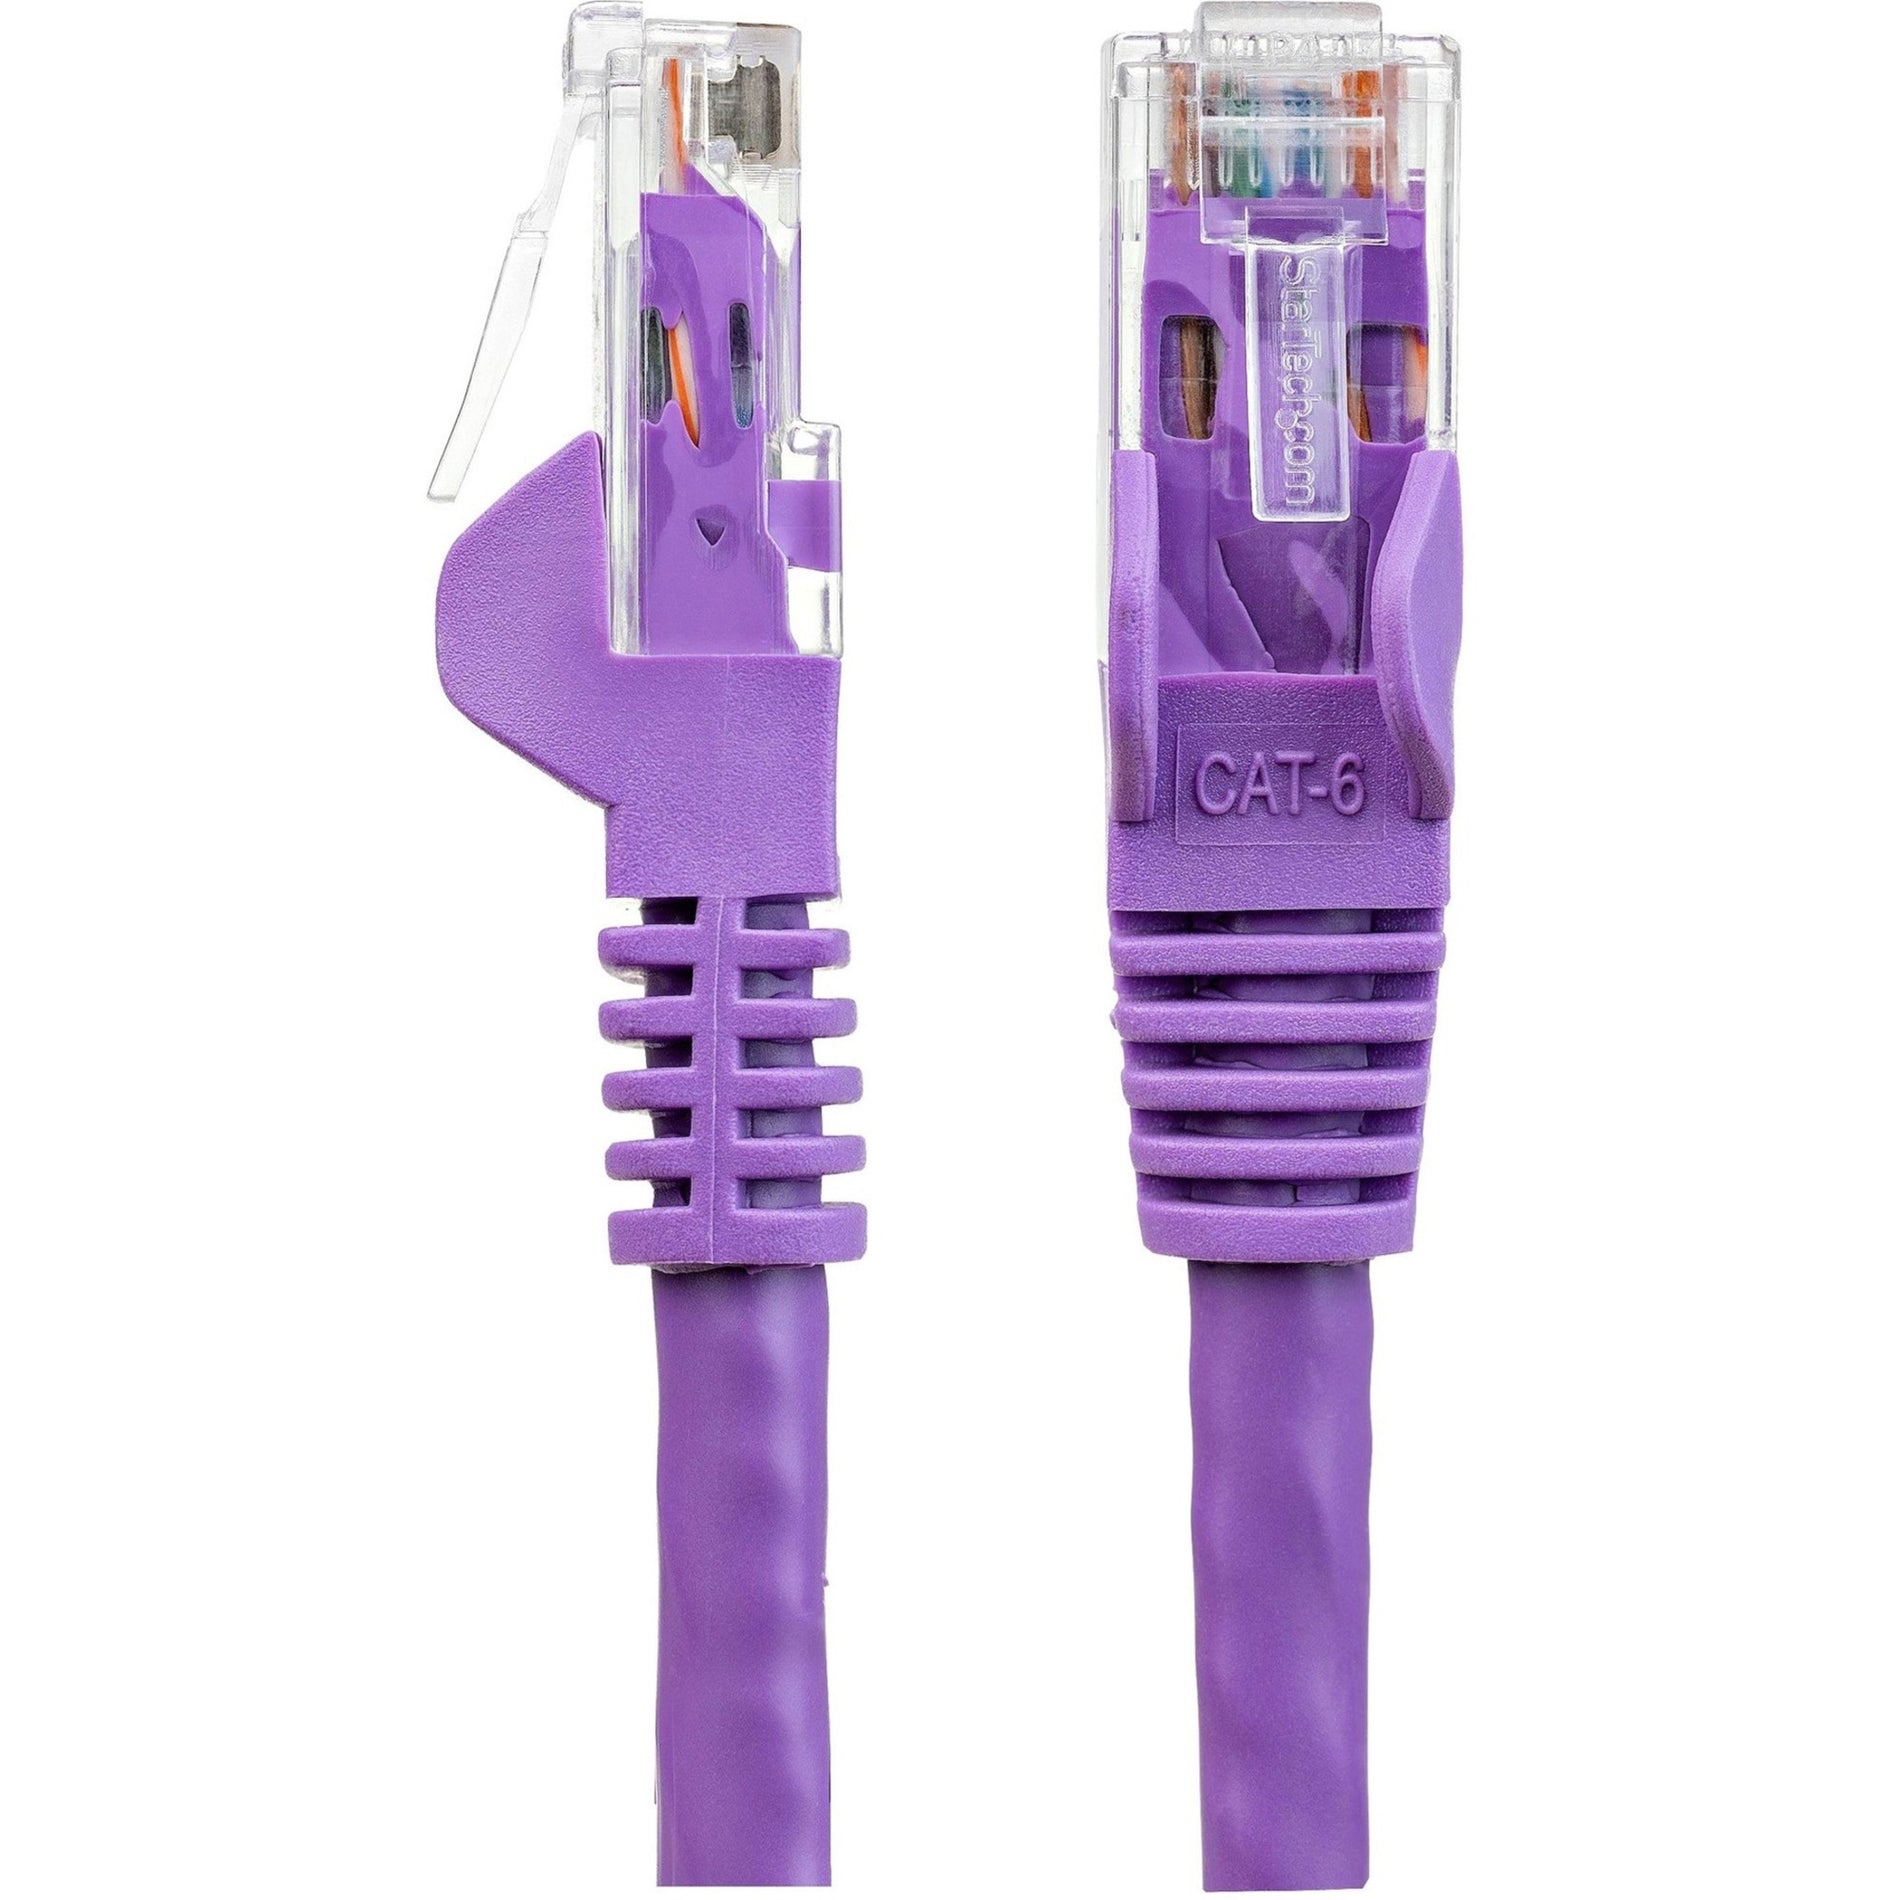 StarTech.com N6PATCH7PL 7 ft Purple Snagless Cat6 UTP Patch Cable, Lifetime Warranty, ETL Verified, 10 Gbit/s Data Transfer Rate